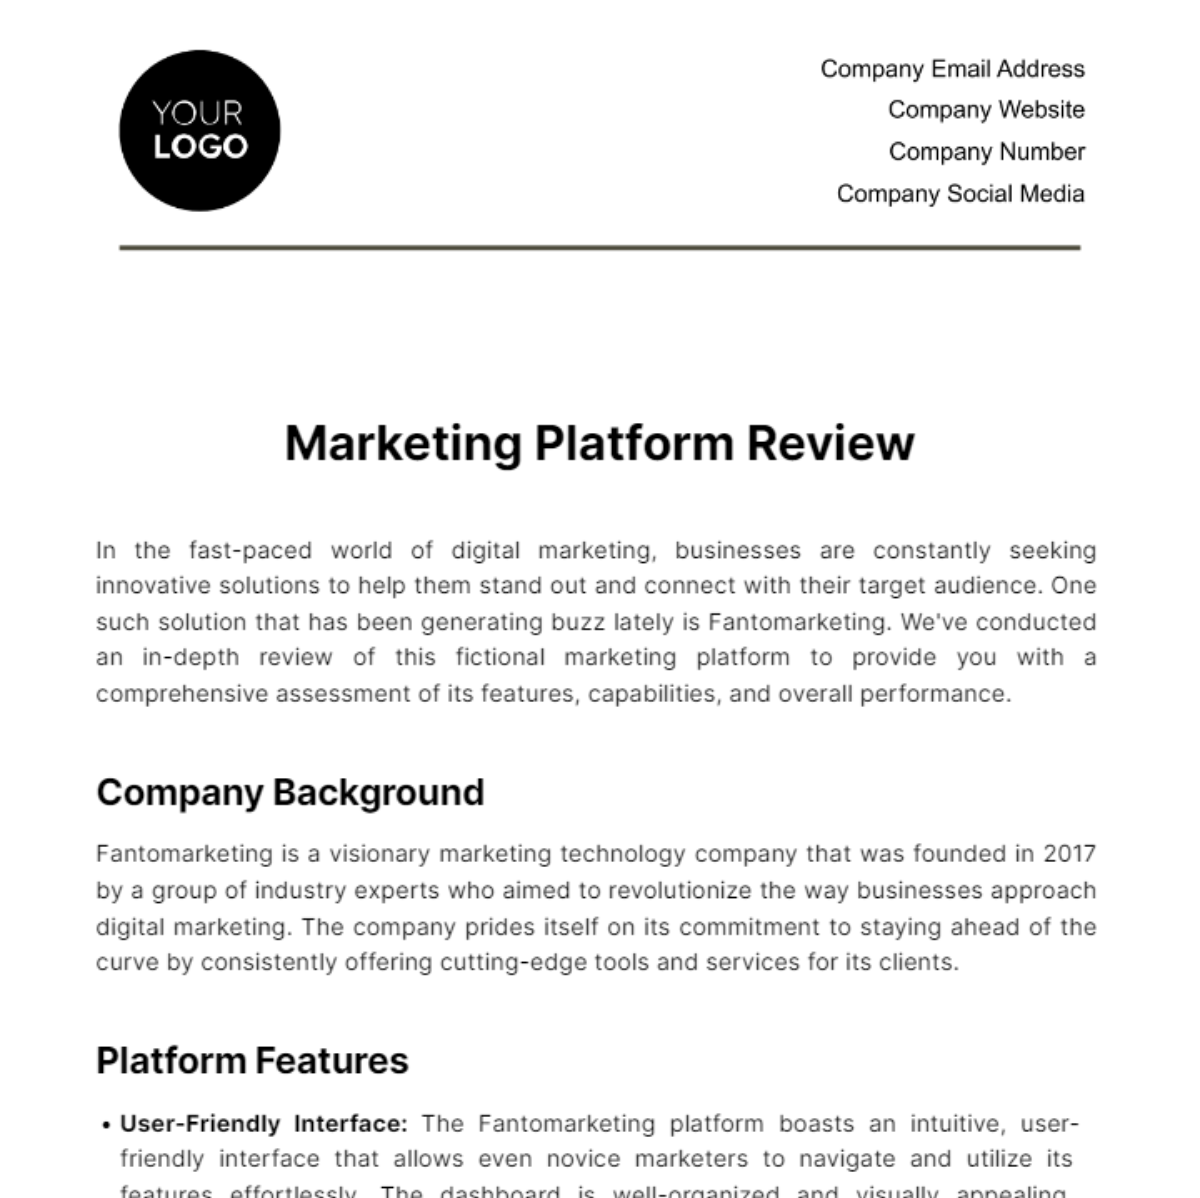 Marketing Platform Review Template